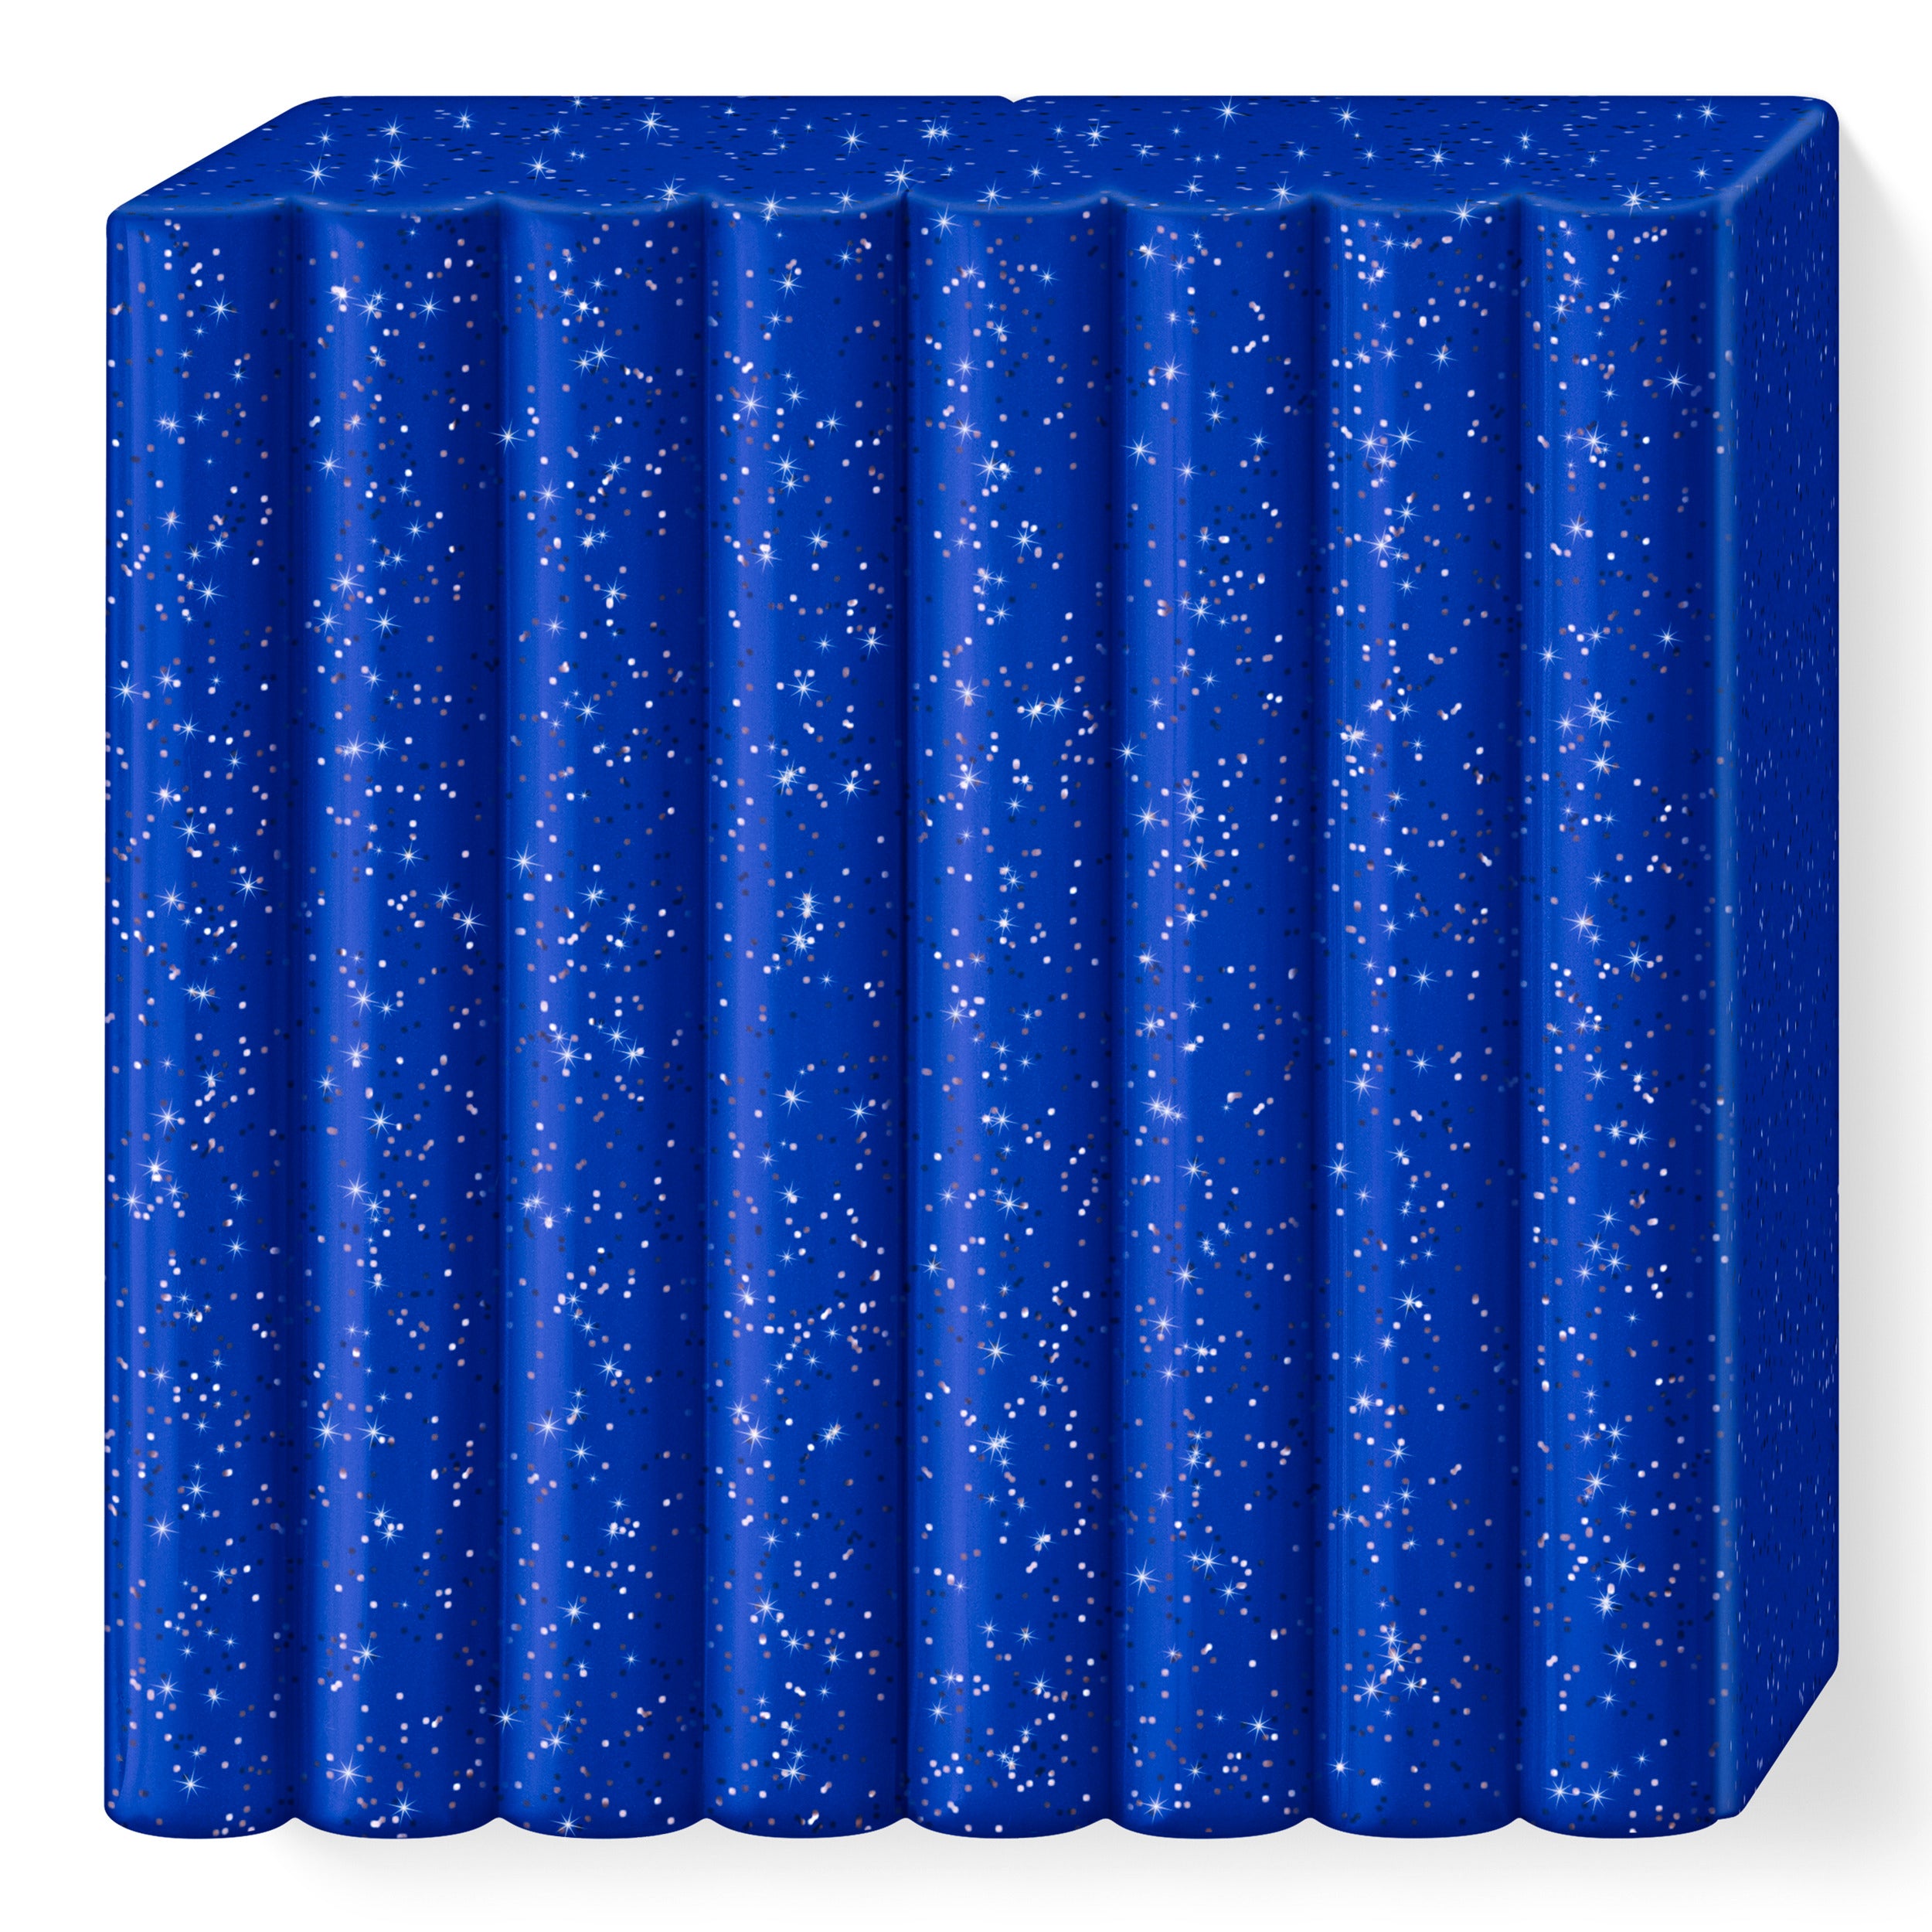 Fimo Effect Polymer Clay Standard Block 57g (2oz) - Glitter Blue